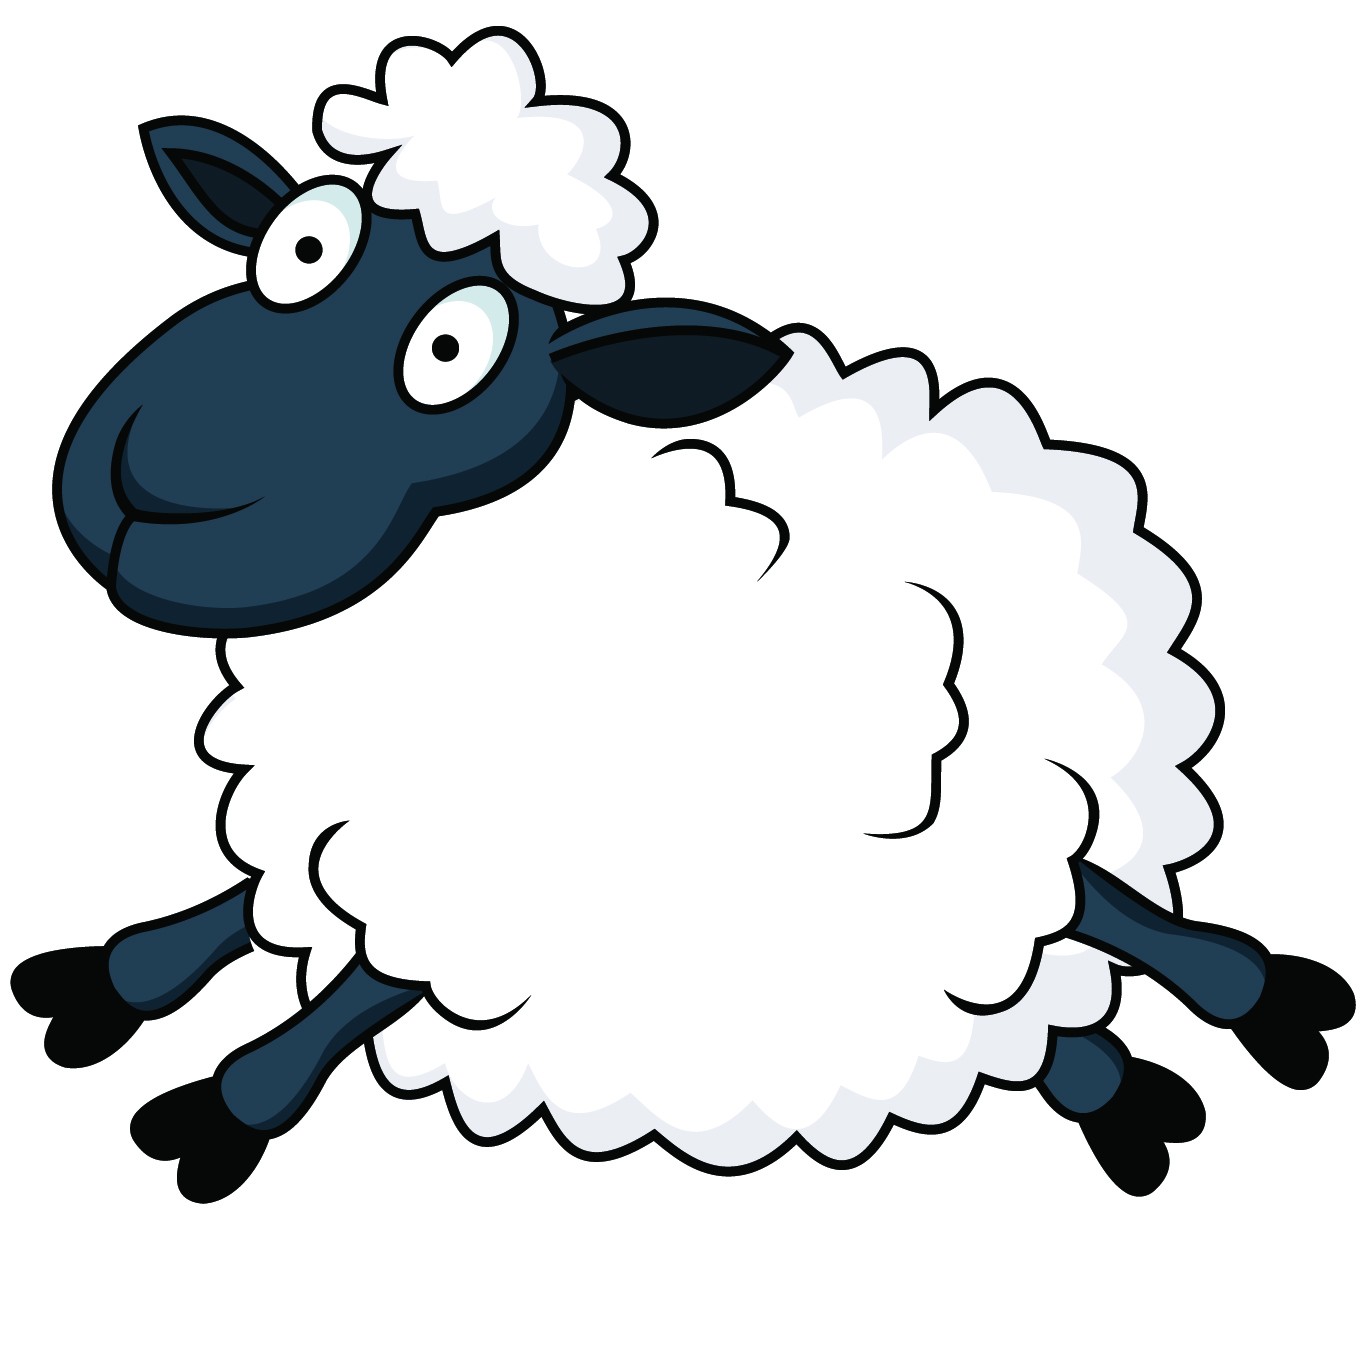 Free Lamb Cartoon Images, Download Free Lamb Cartoon Images png images,  Free ClipArts on Clipart Library